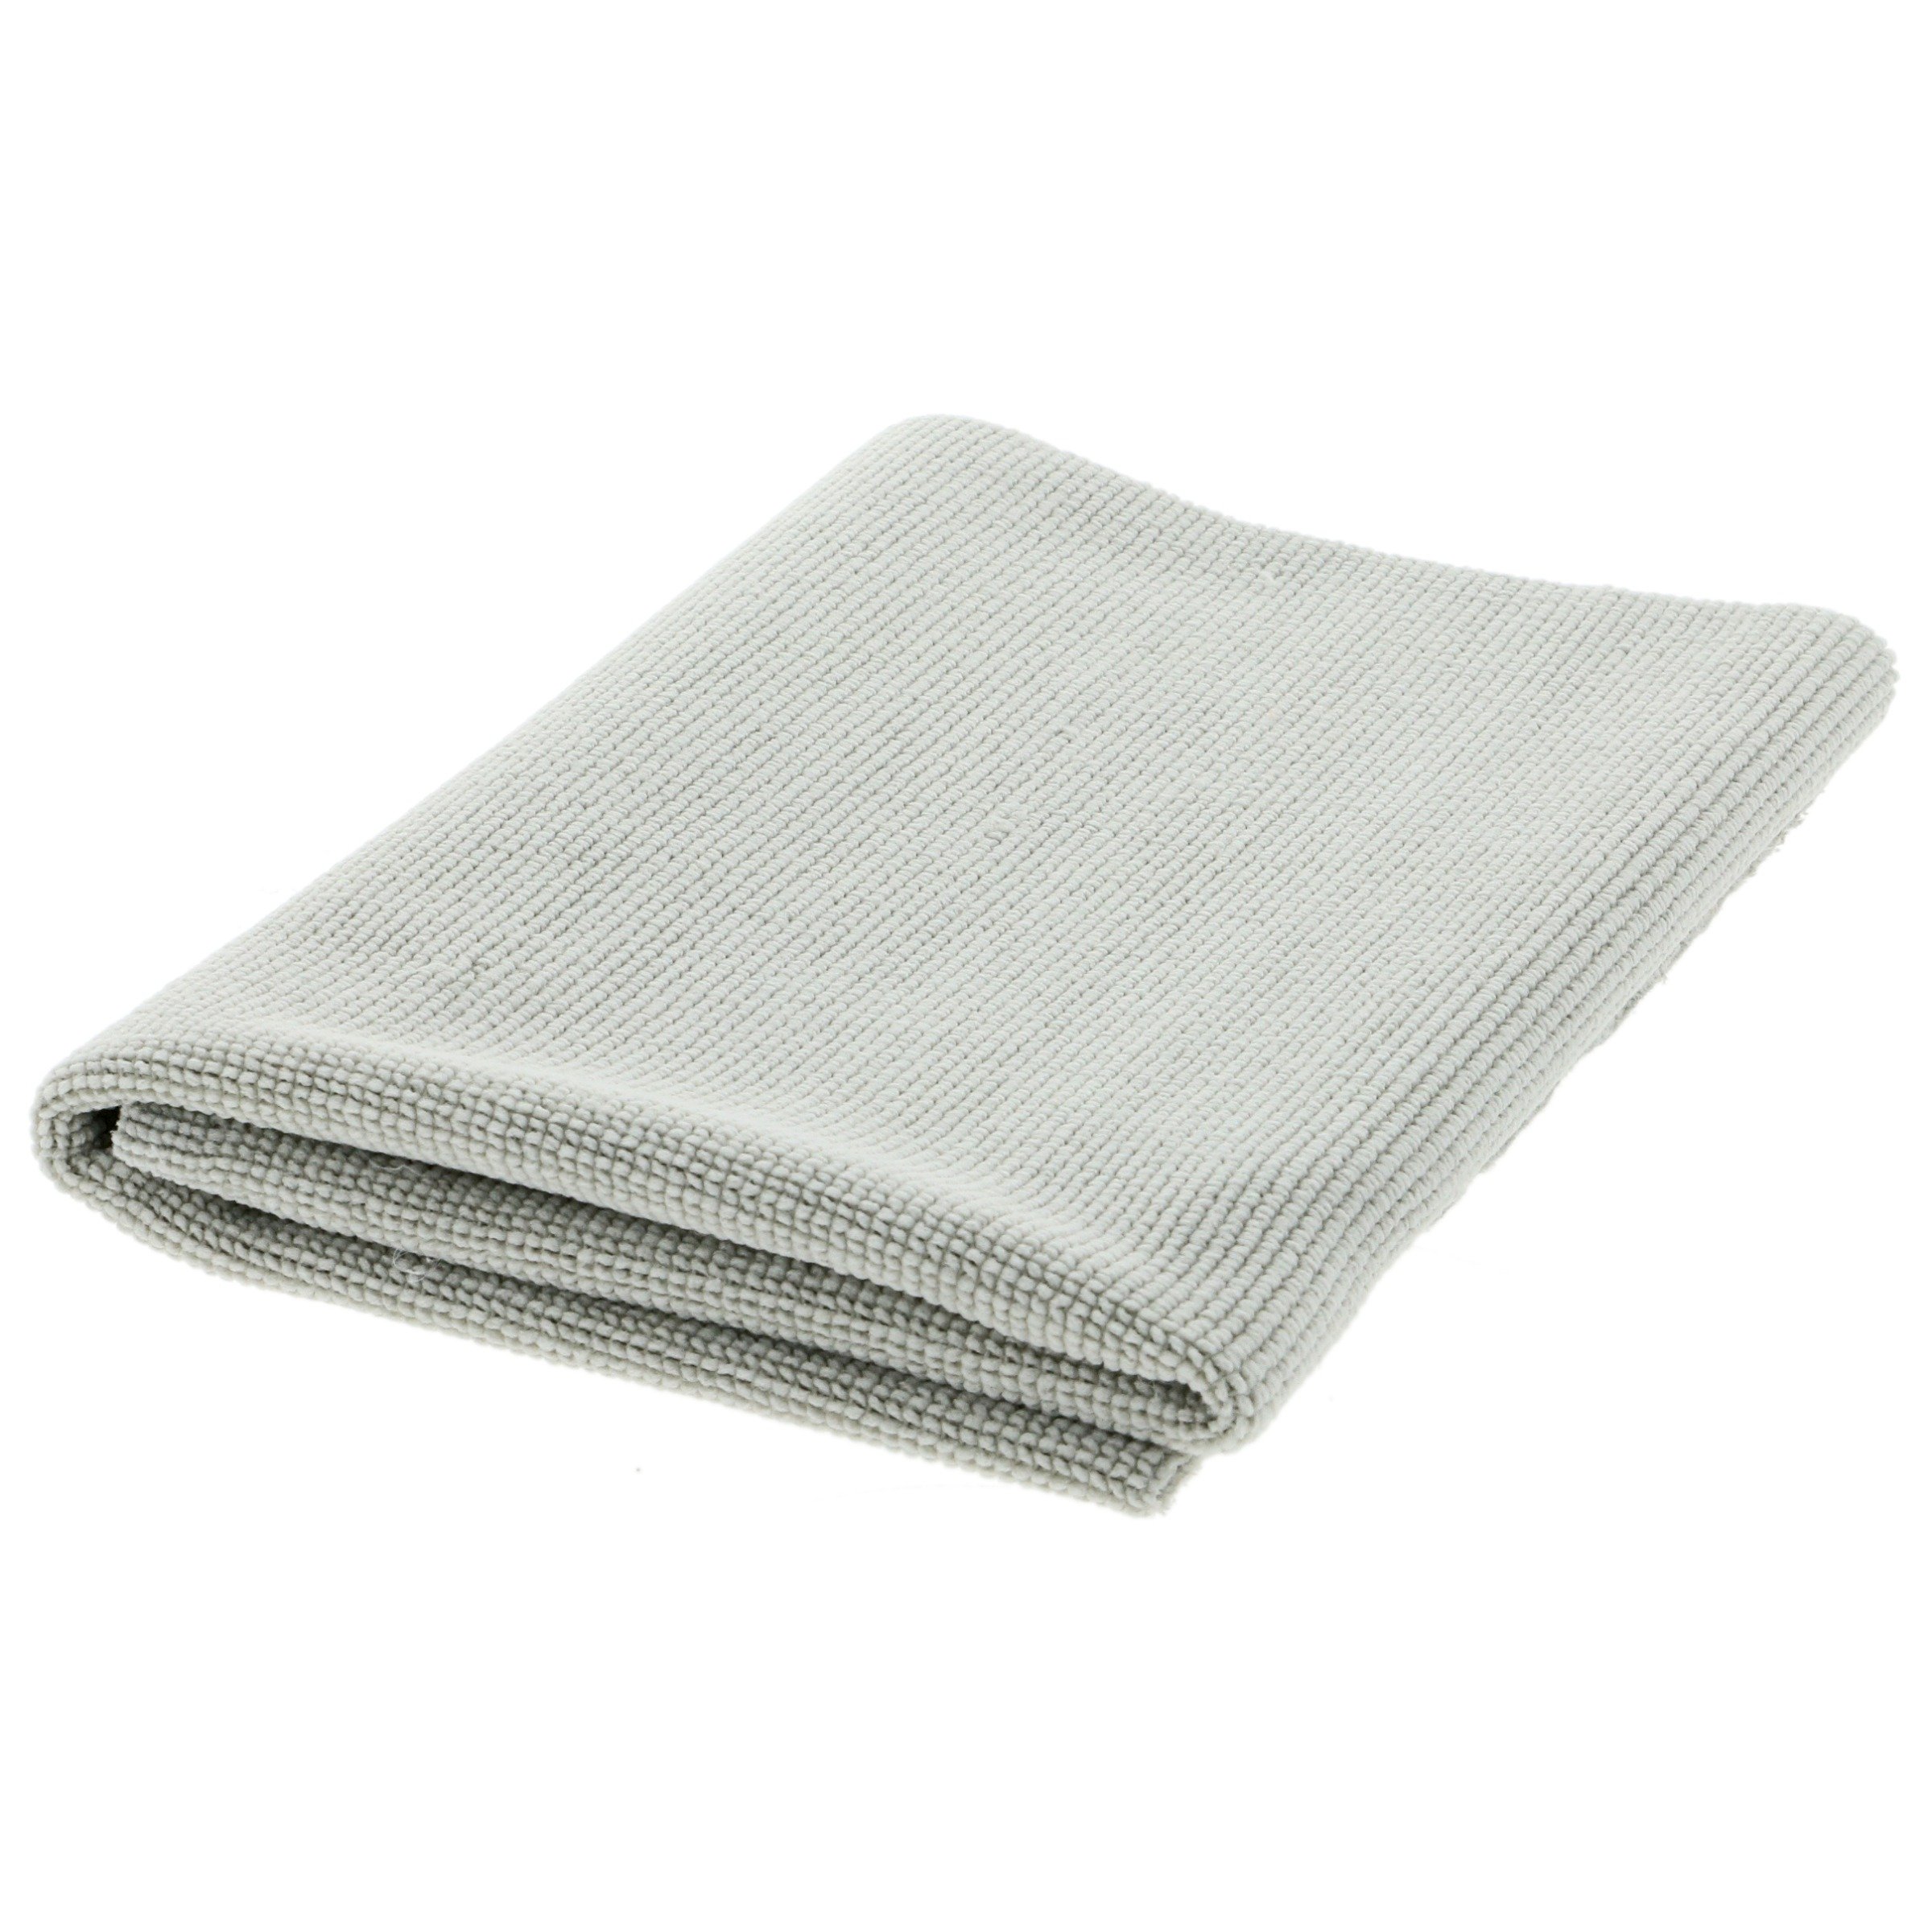 The Edgeless Pearl Ceramic Coating Towel - 41x41cm